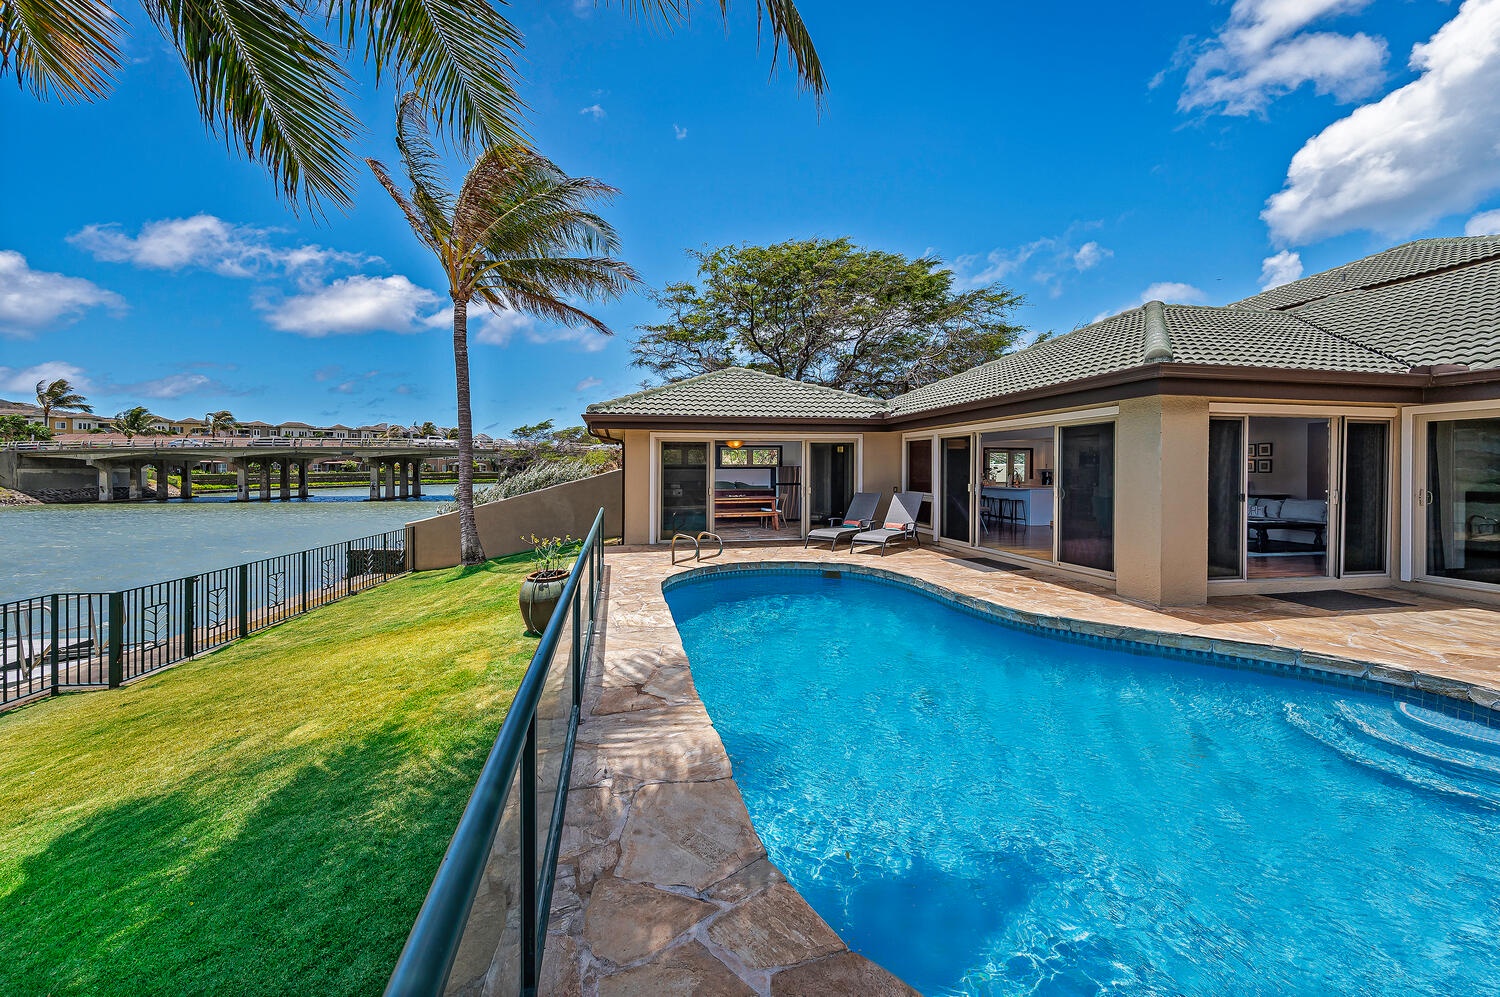 Honolulu Vacation Rentals, Nani Wai - Lounge by the pool with beautiful marina and Koko Crater views!